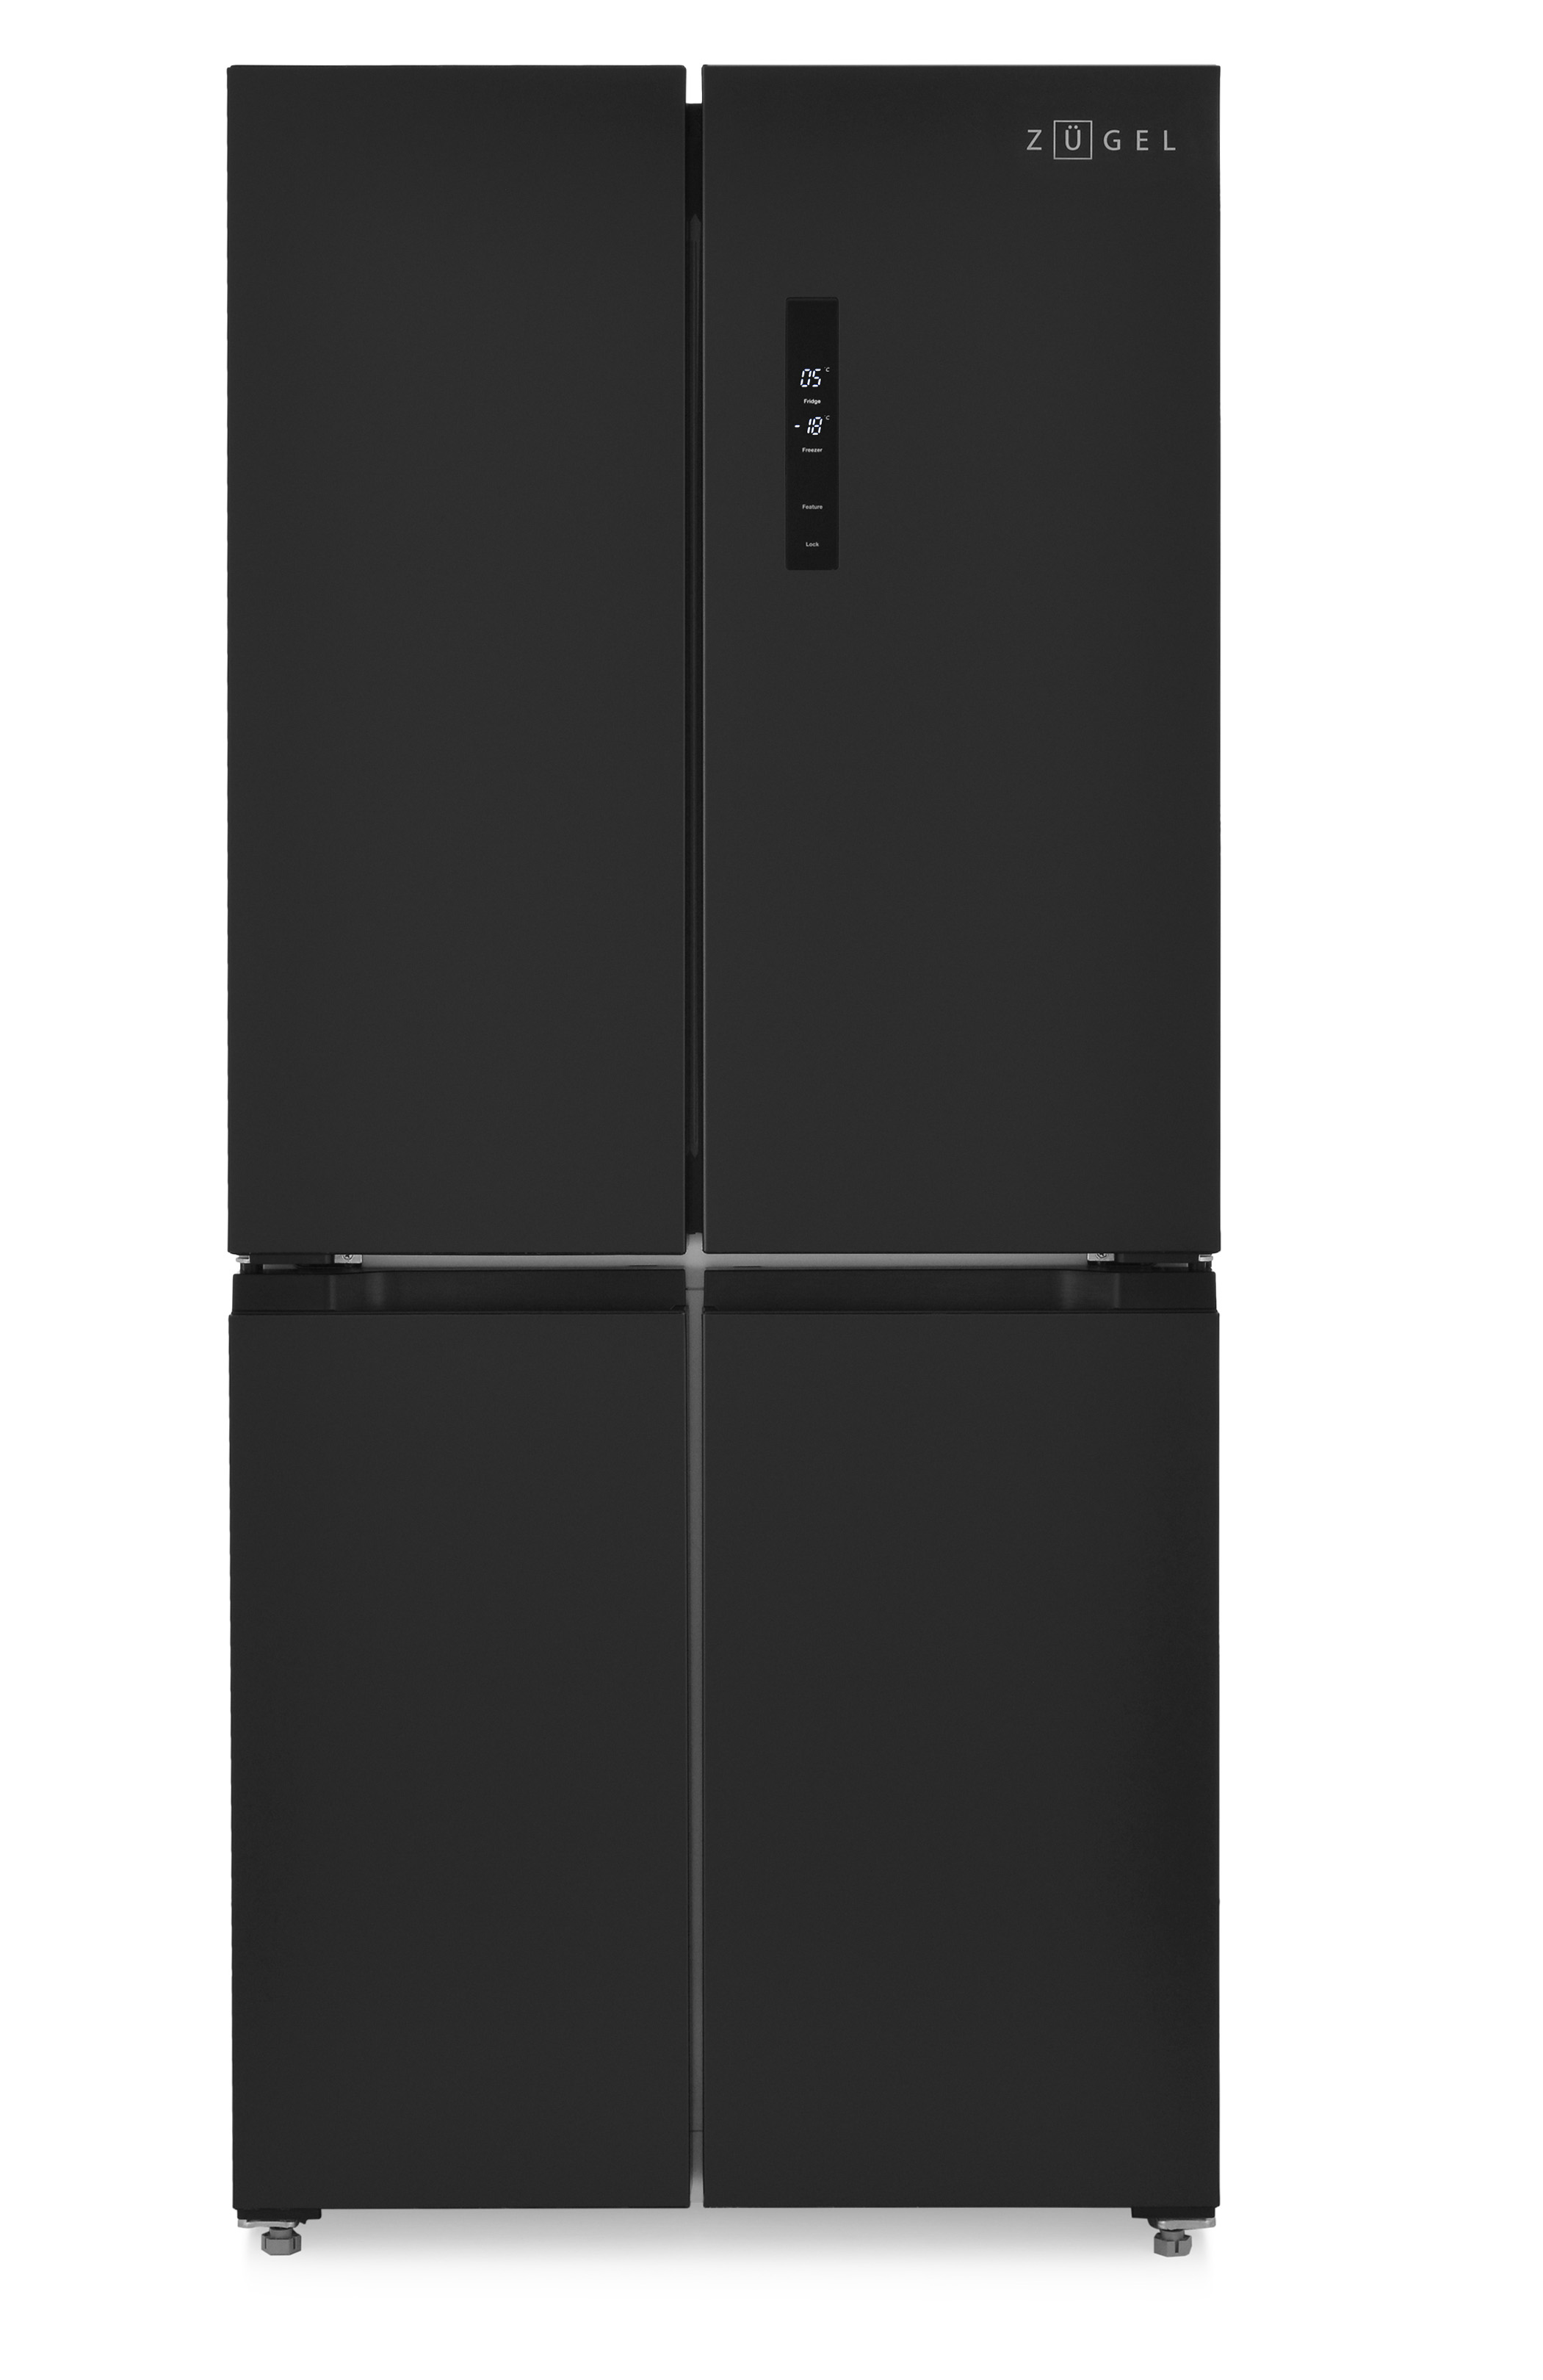 Холодильник ZUGEL ZRCD430B черный многокамерный холодильник zugel zrcd430b